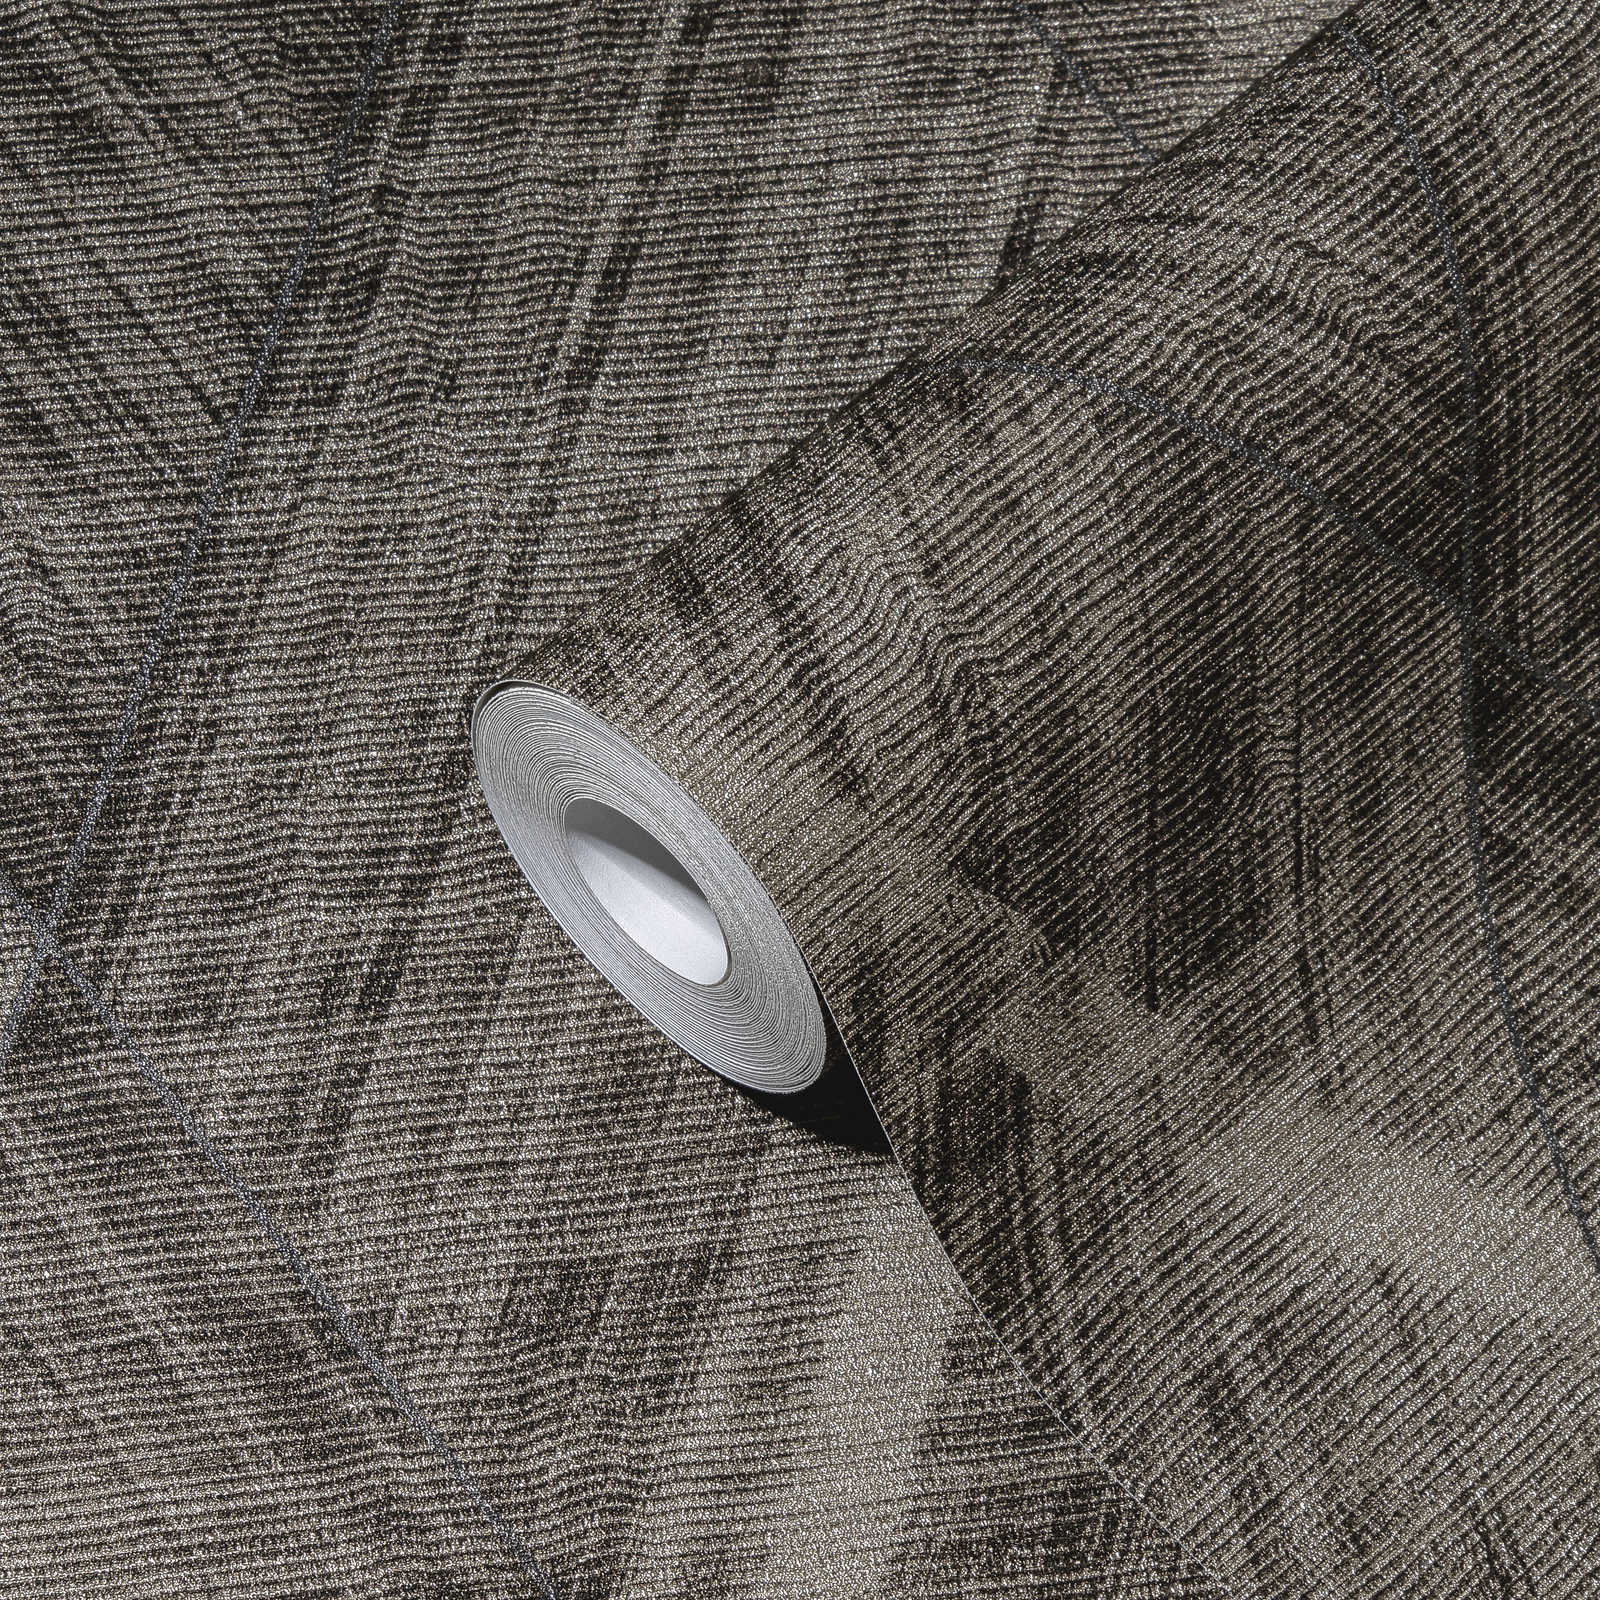             Textile optics wallpaper with diamond pattern - metallic, grey
        